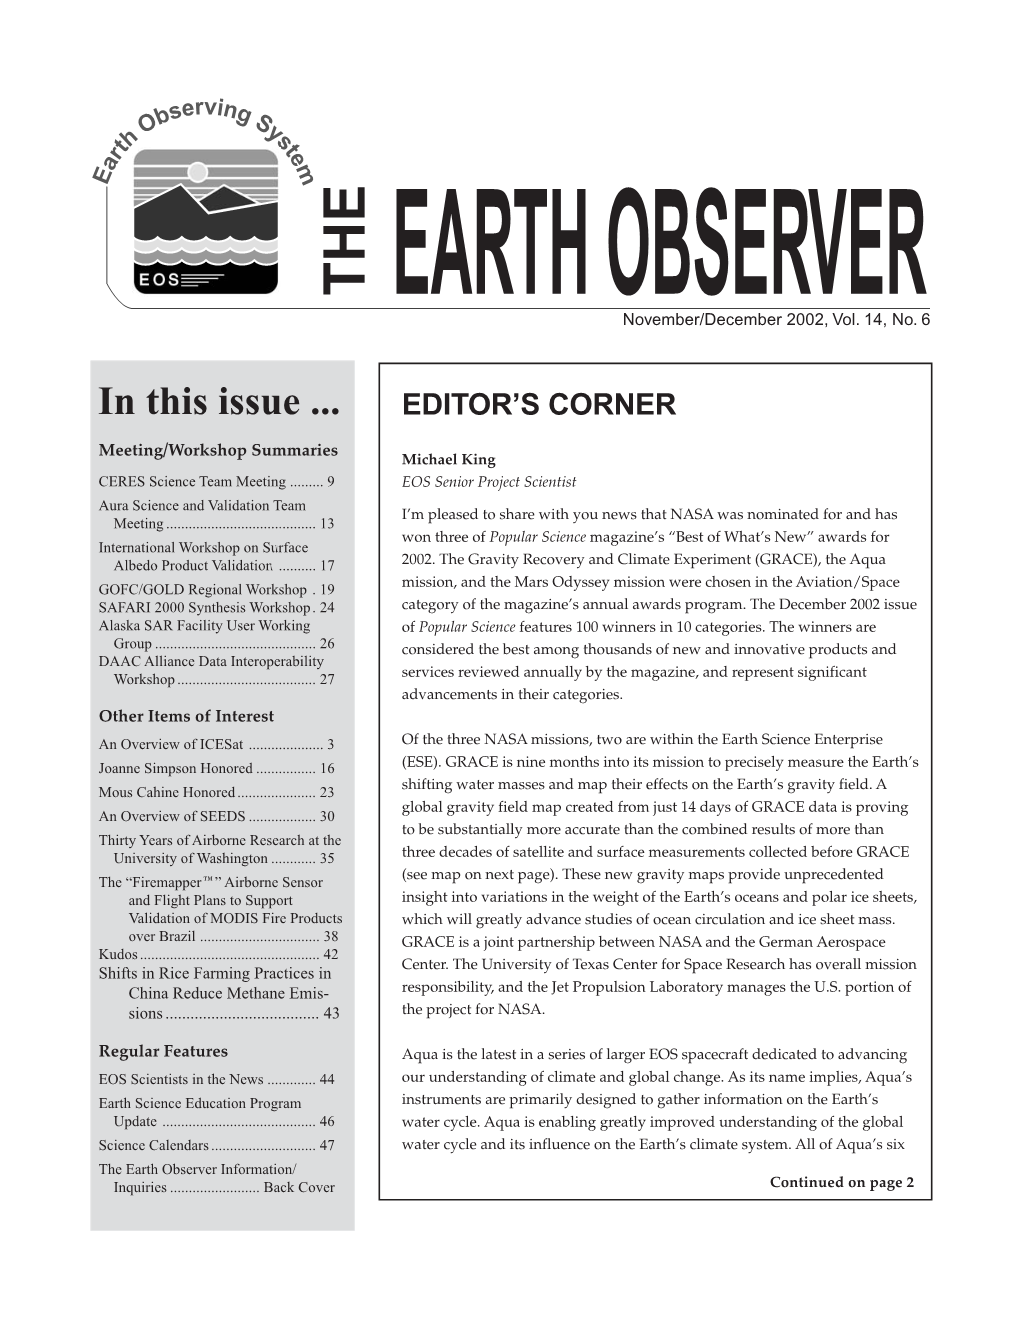 THE EARTH OBSERVER November/December 2002, Vol